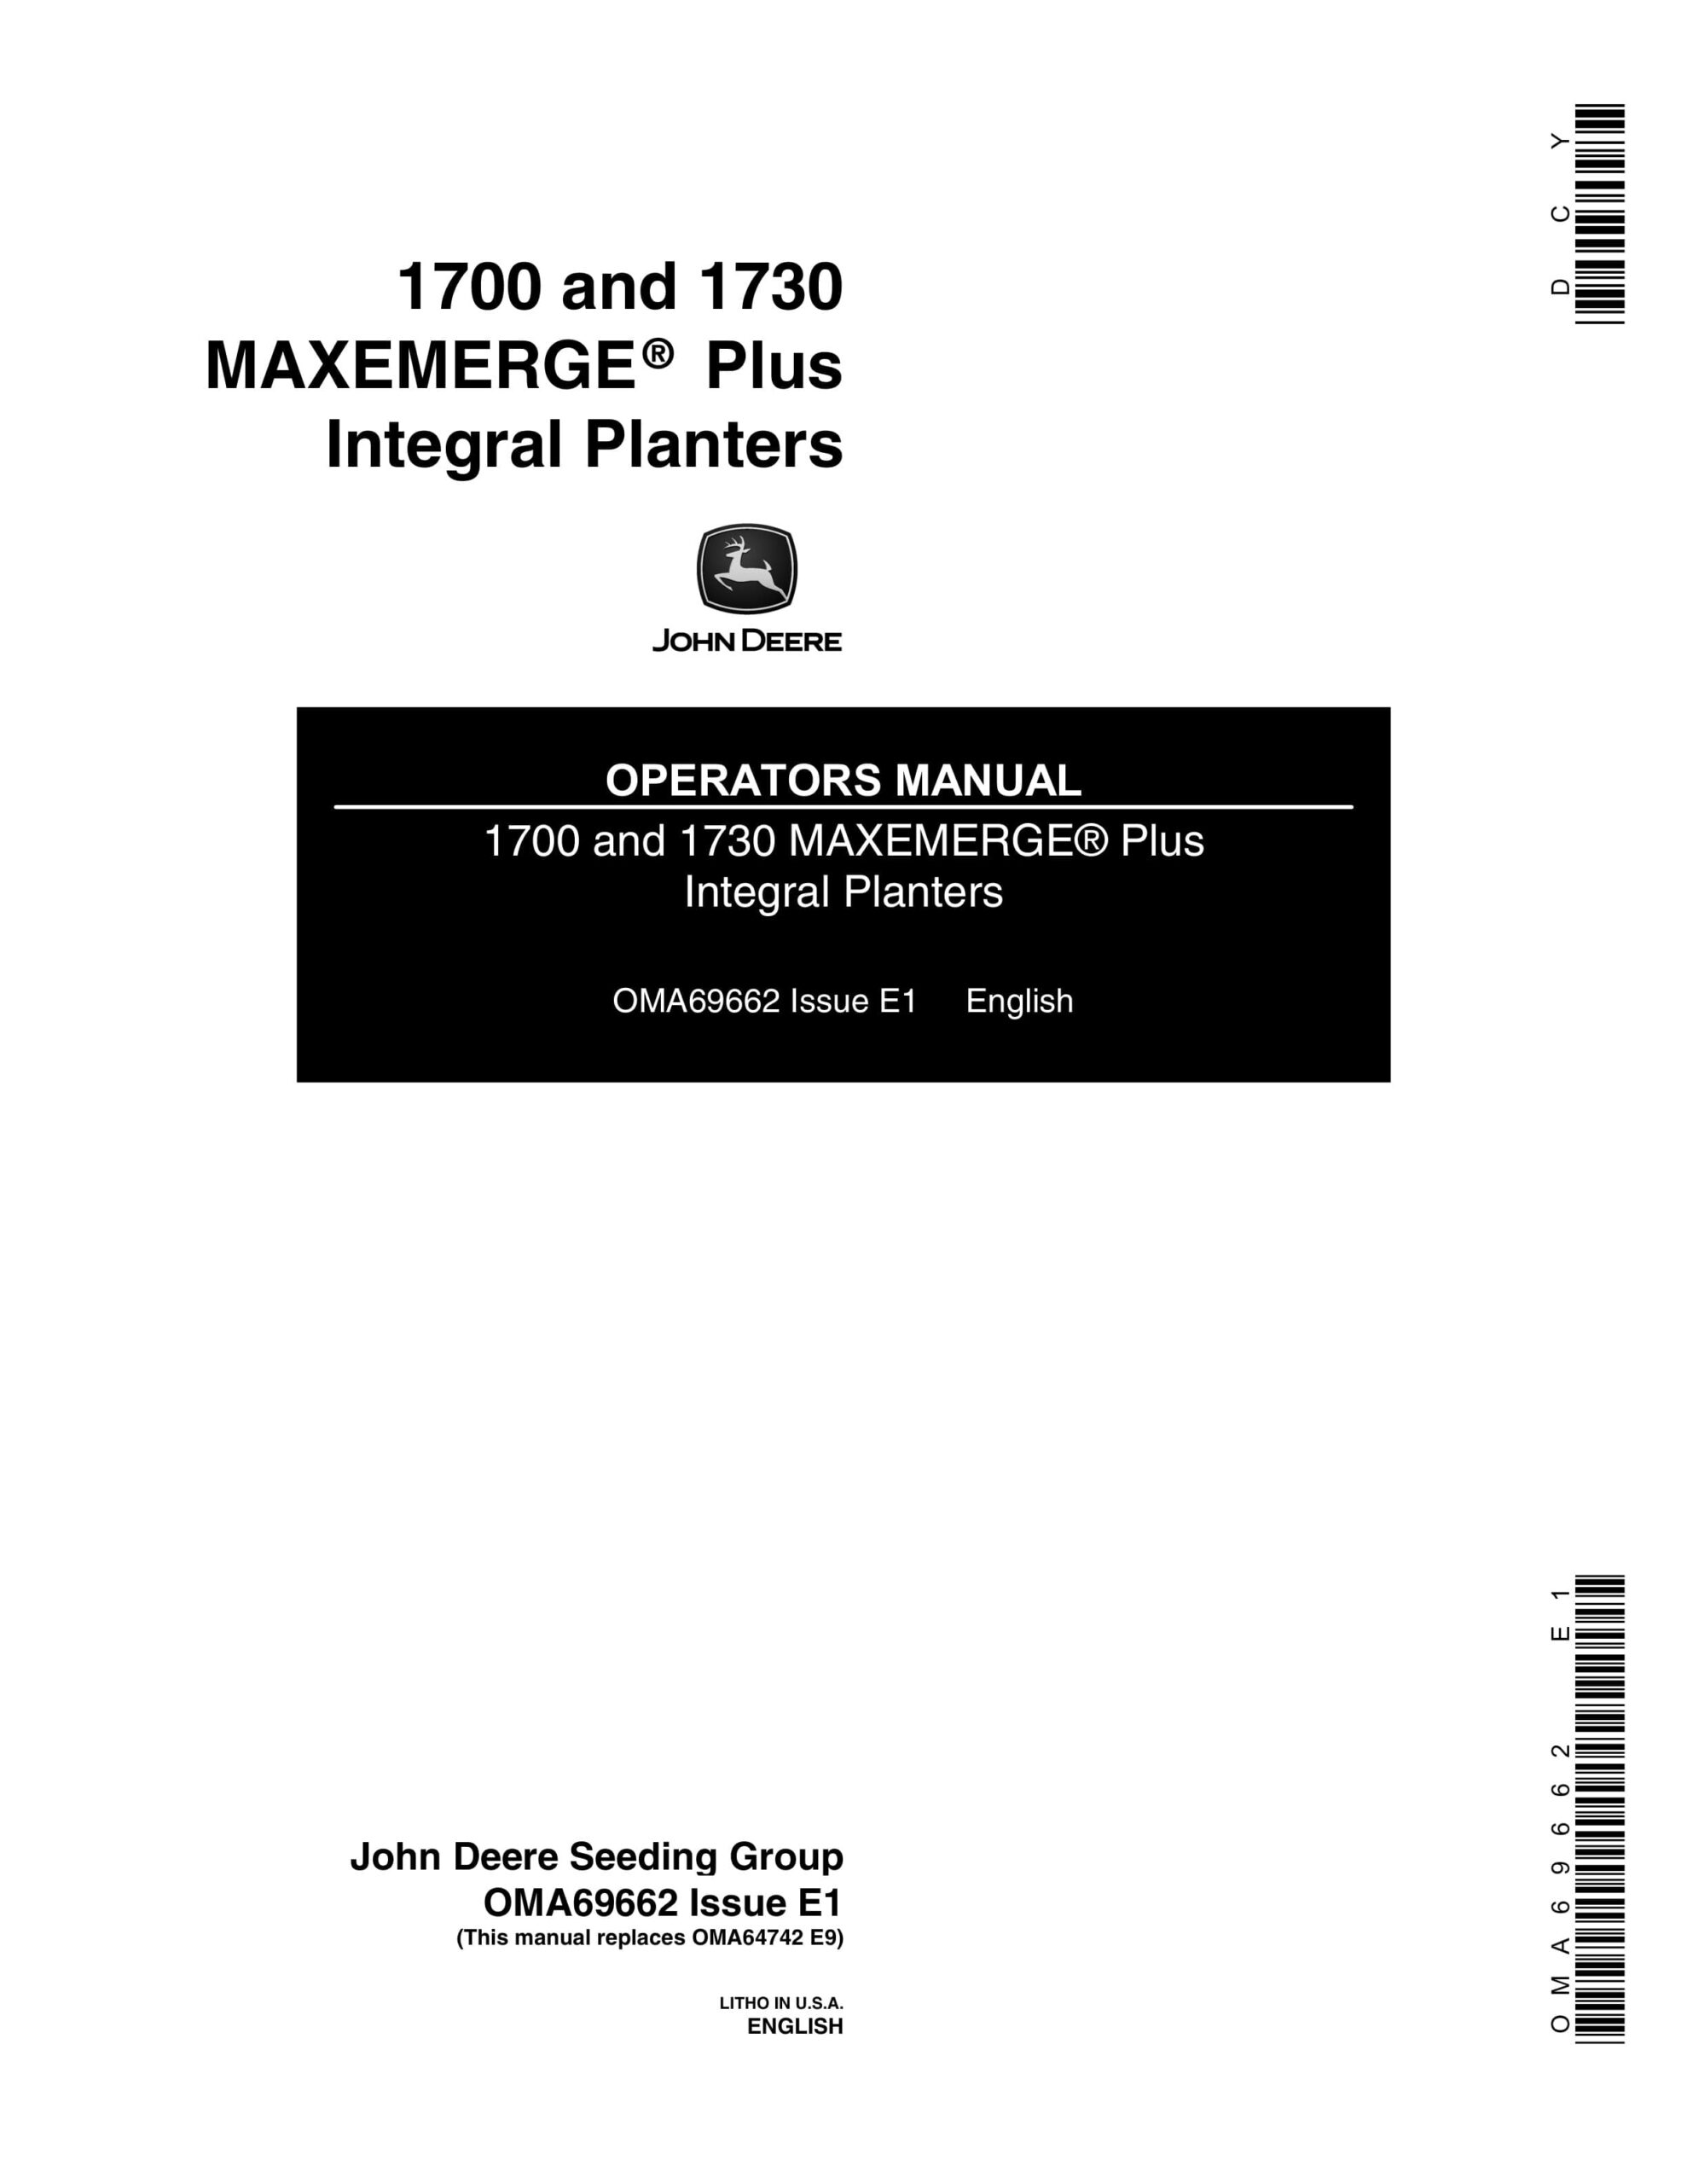 John Deere 1700 and 1730 MAXEMERGE Plus Integral Planter Operator Manual OMA69662-1